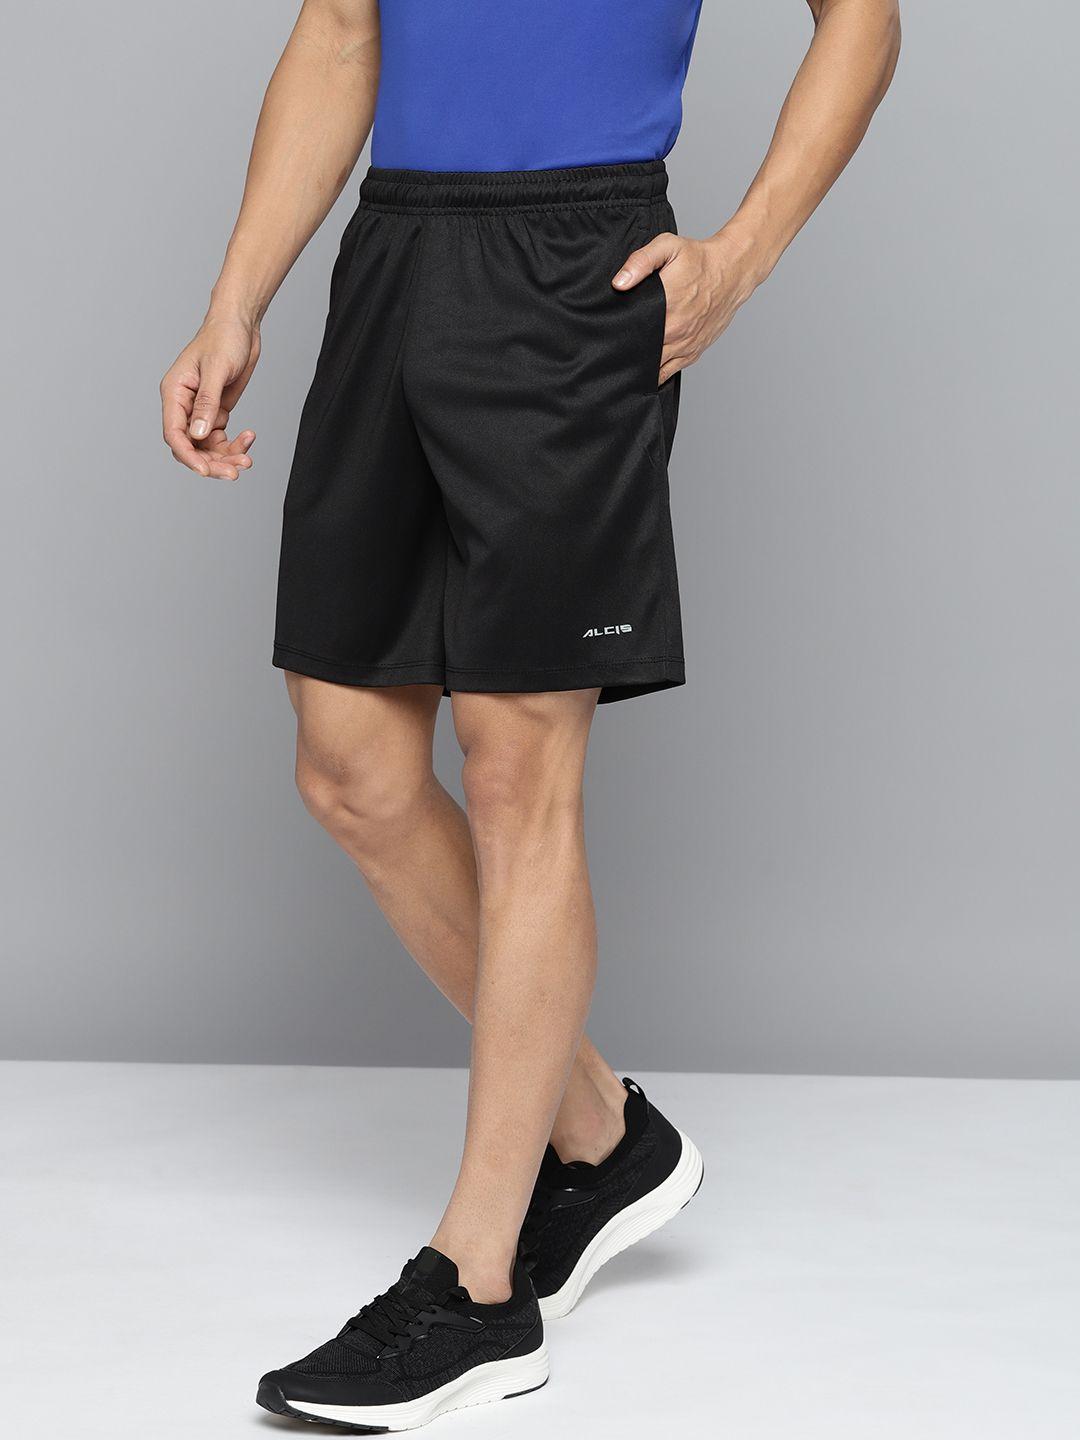 alcis-men-black-solid-slim-fit-running-sports-shorts